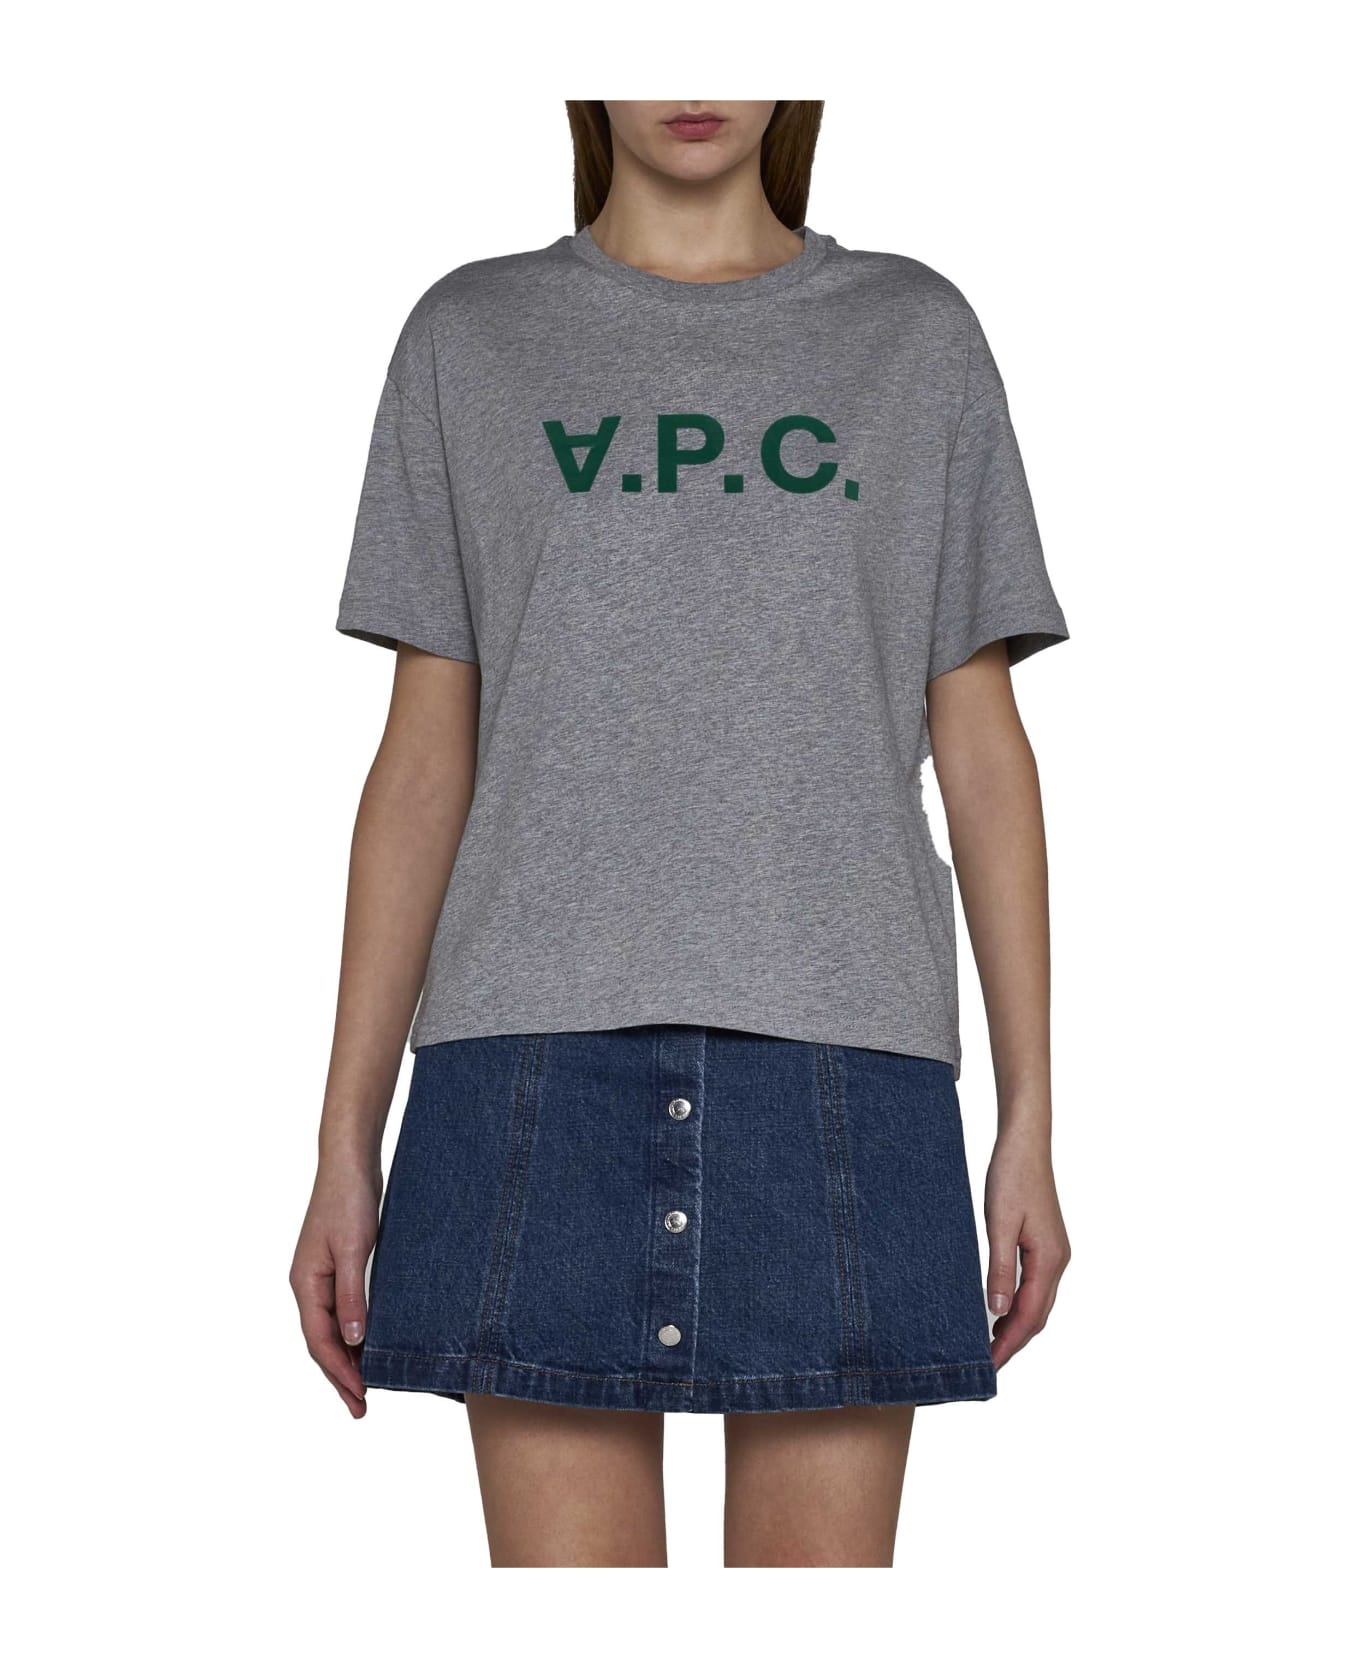 A.P.C. Ana T-shirt - Heathered light grey Tシャツ